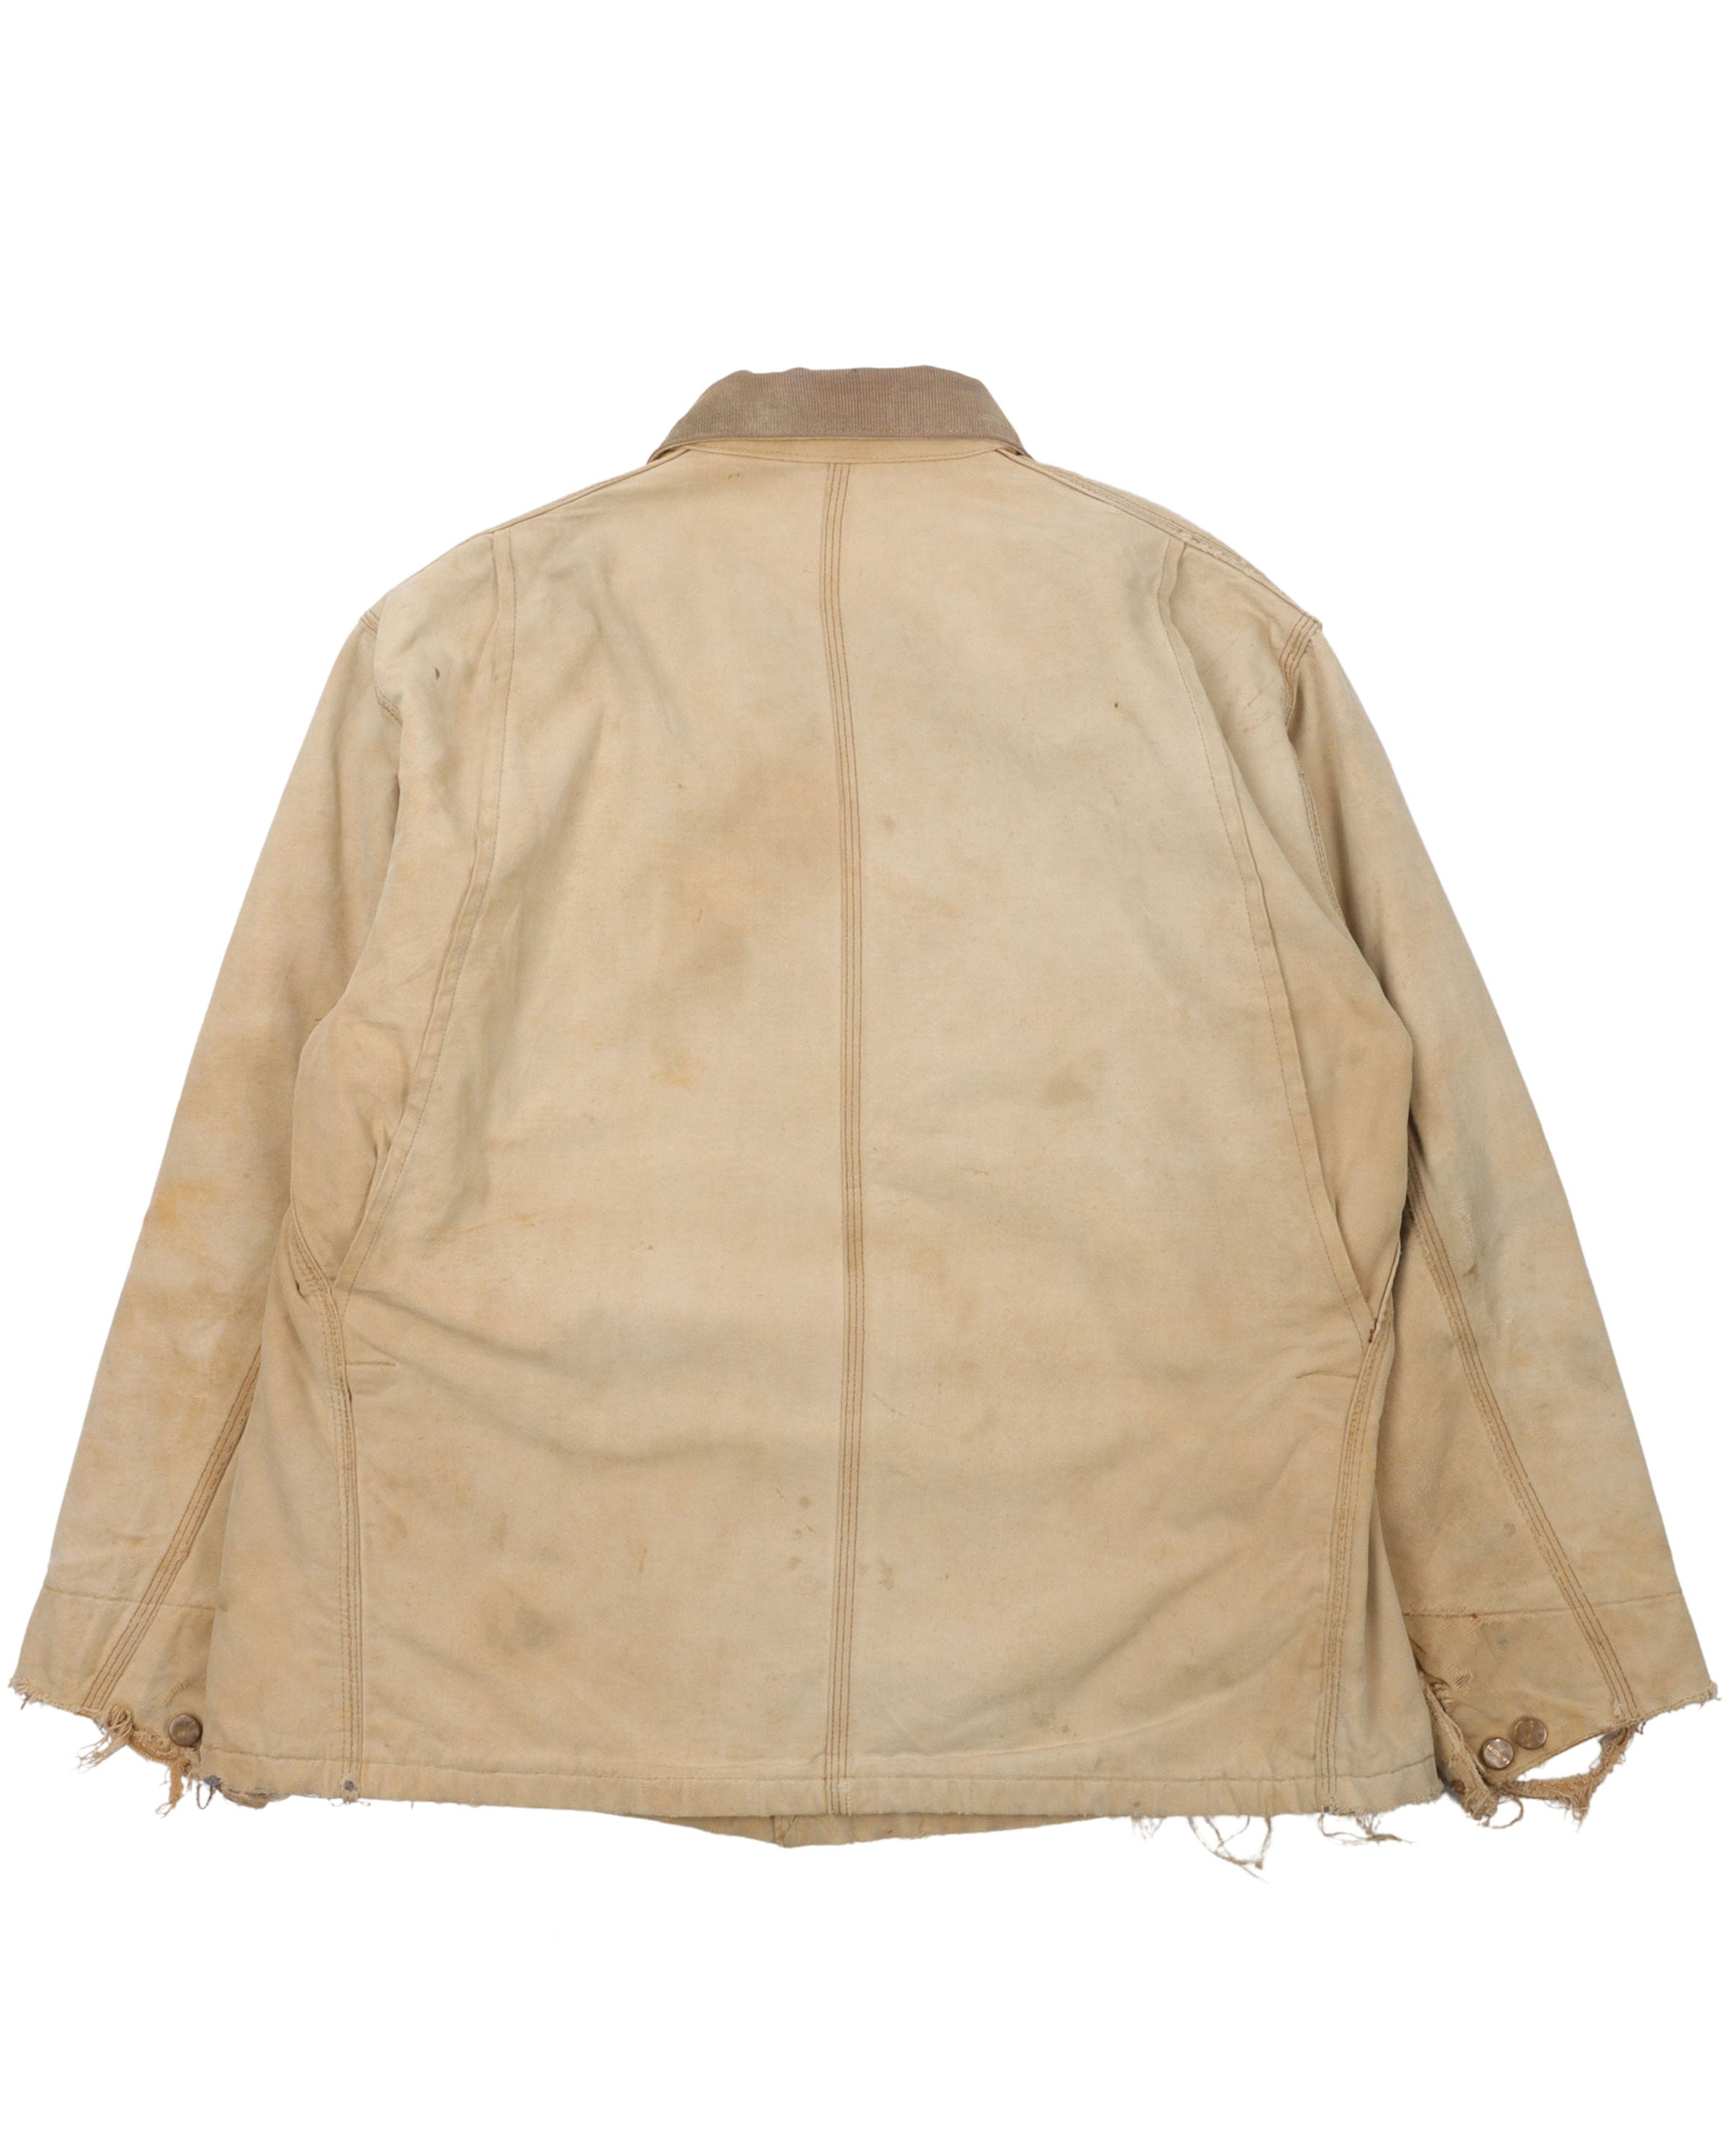 Carhartt Distressed Chore Jacket